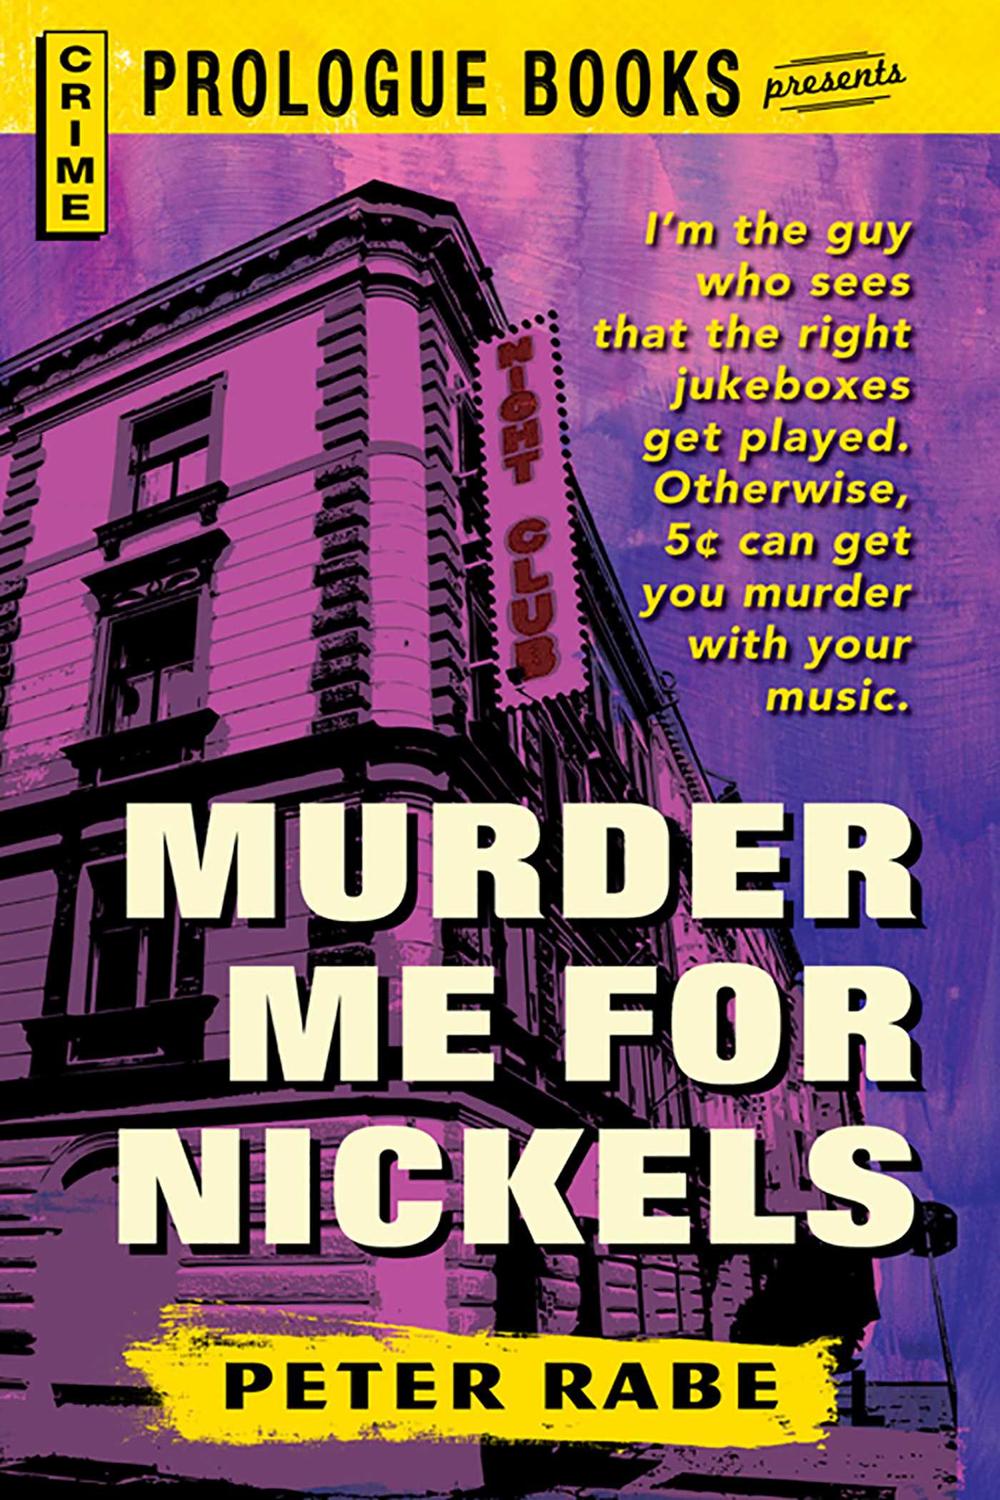 Murder Me for Nickels - Peter Rabe